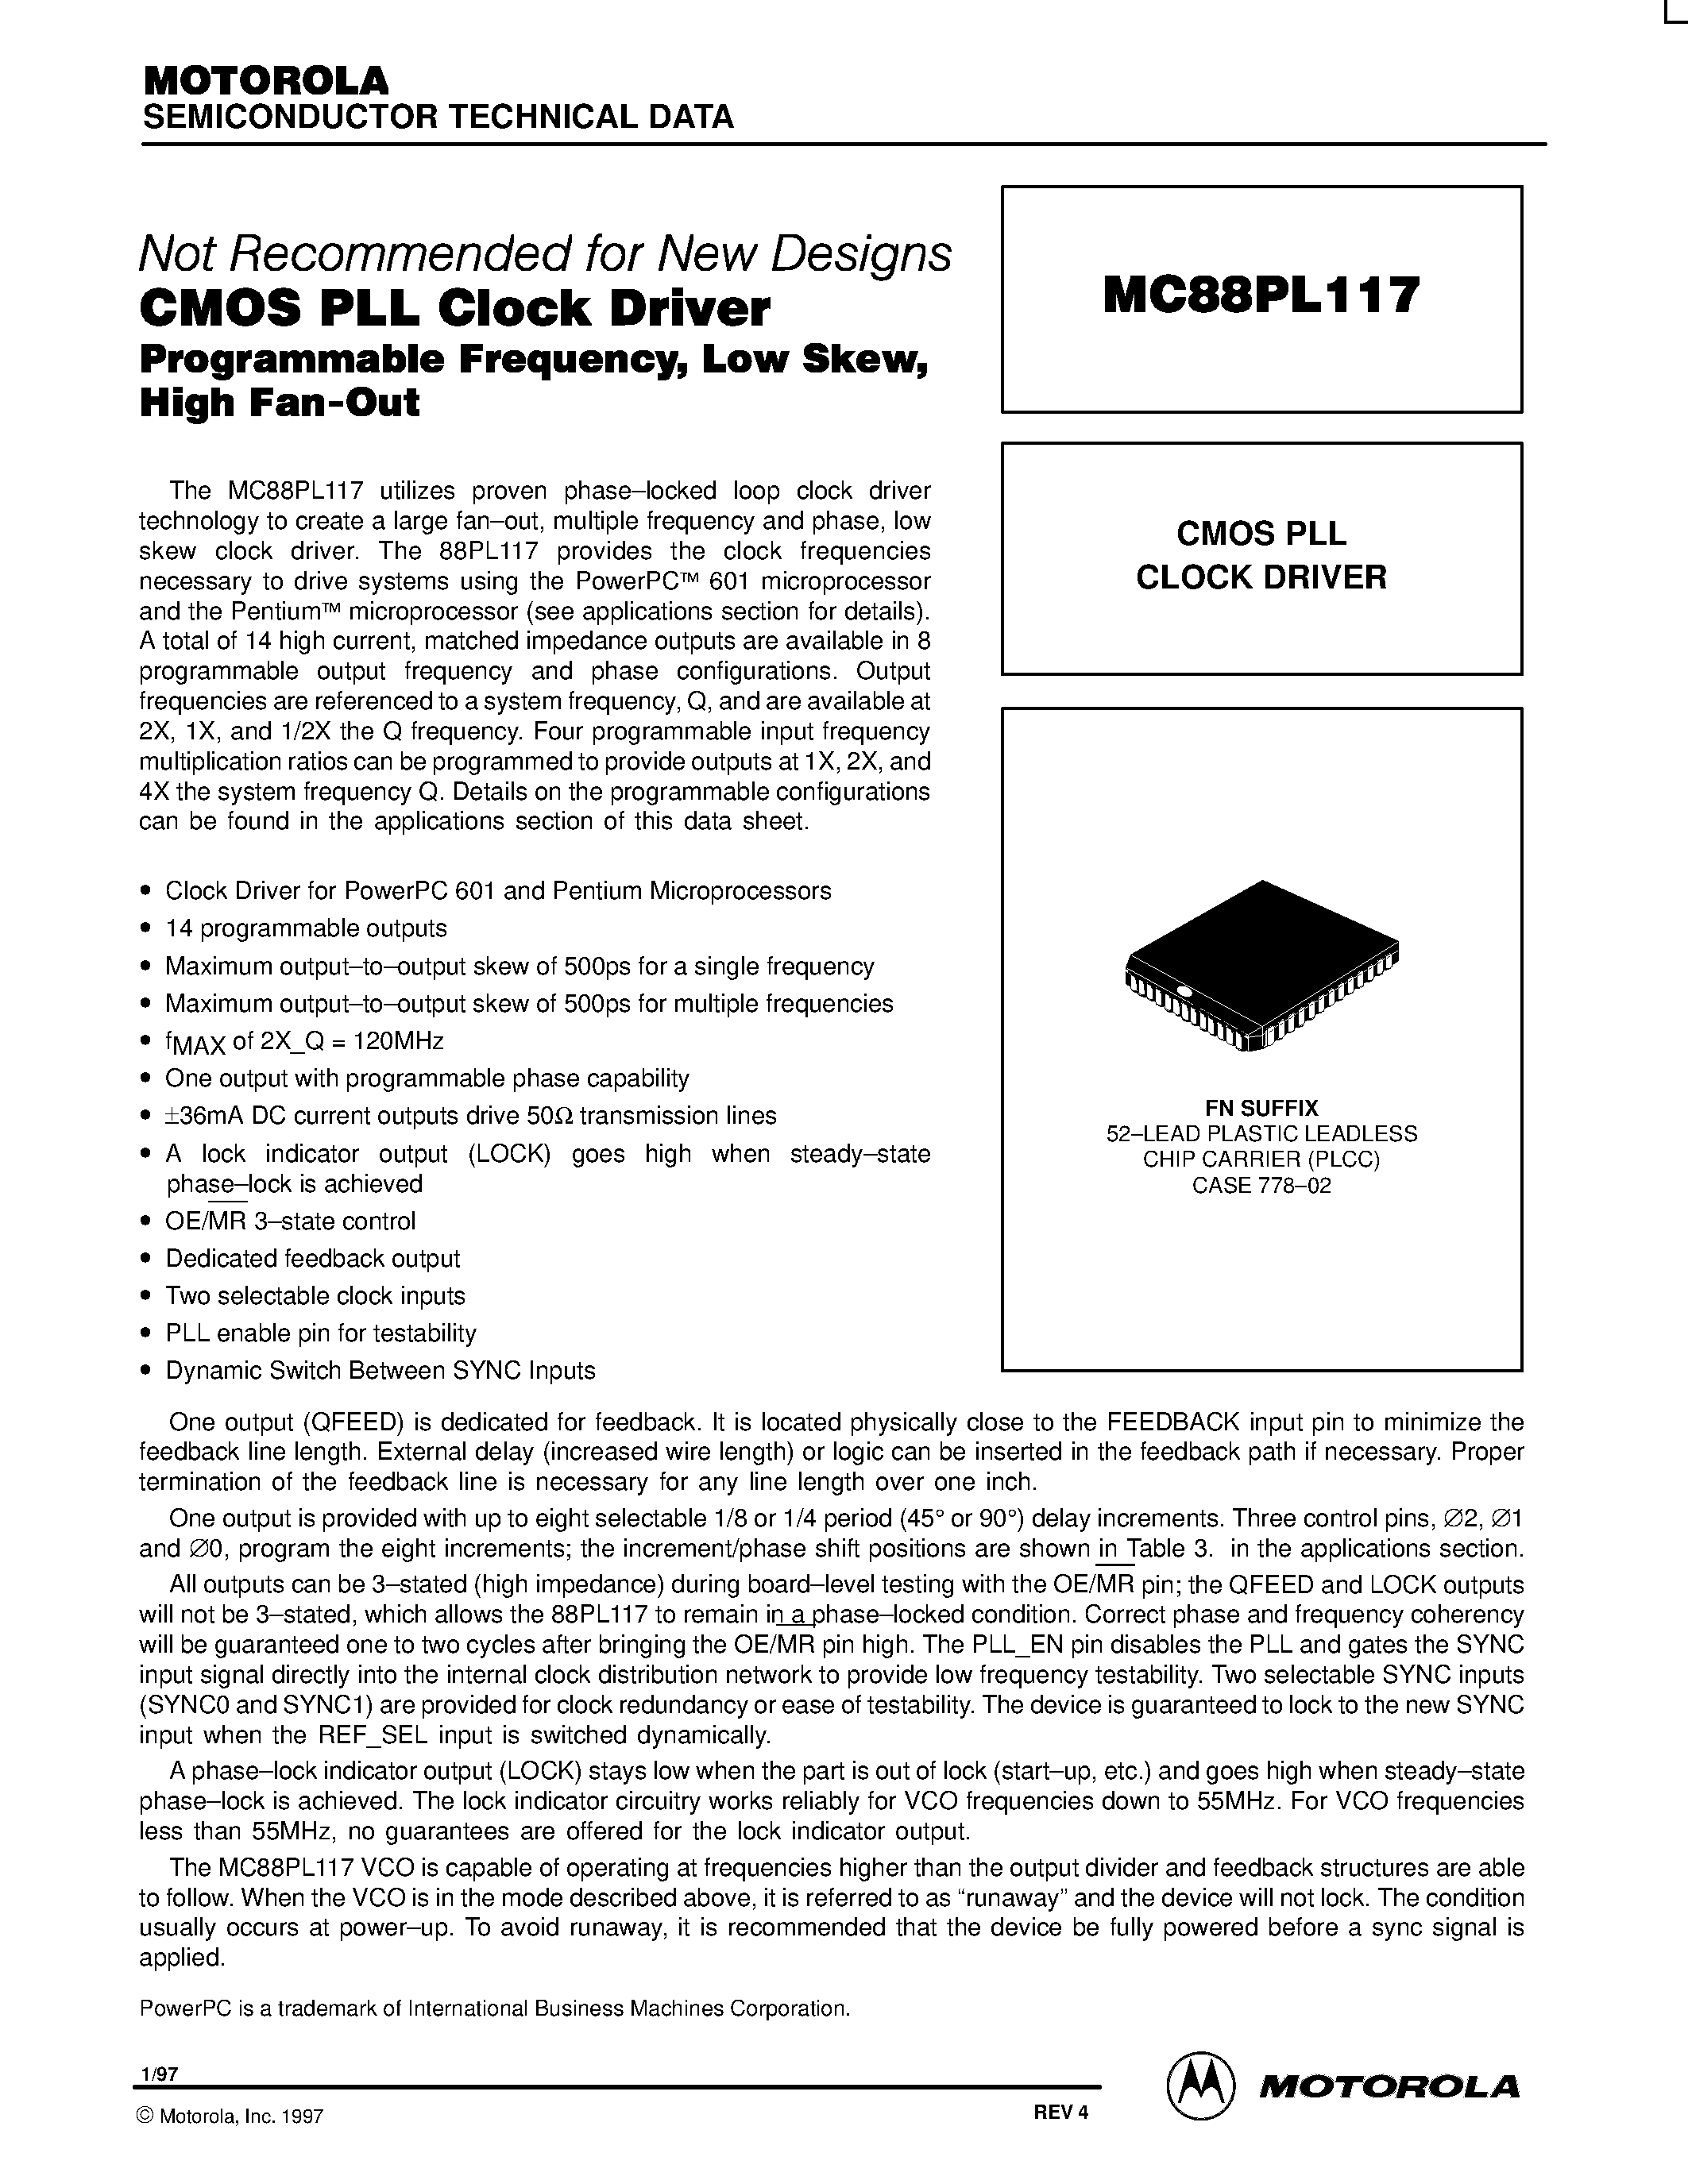 Datasheet MC88PL117FN - CMOS PLL CLOCK DRIVER page 1